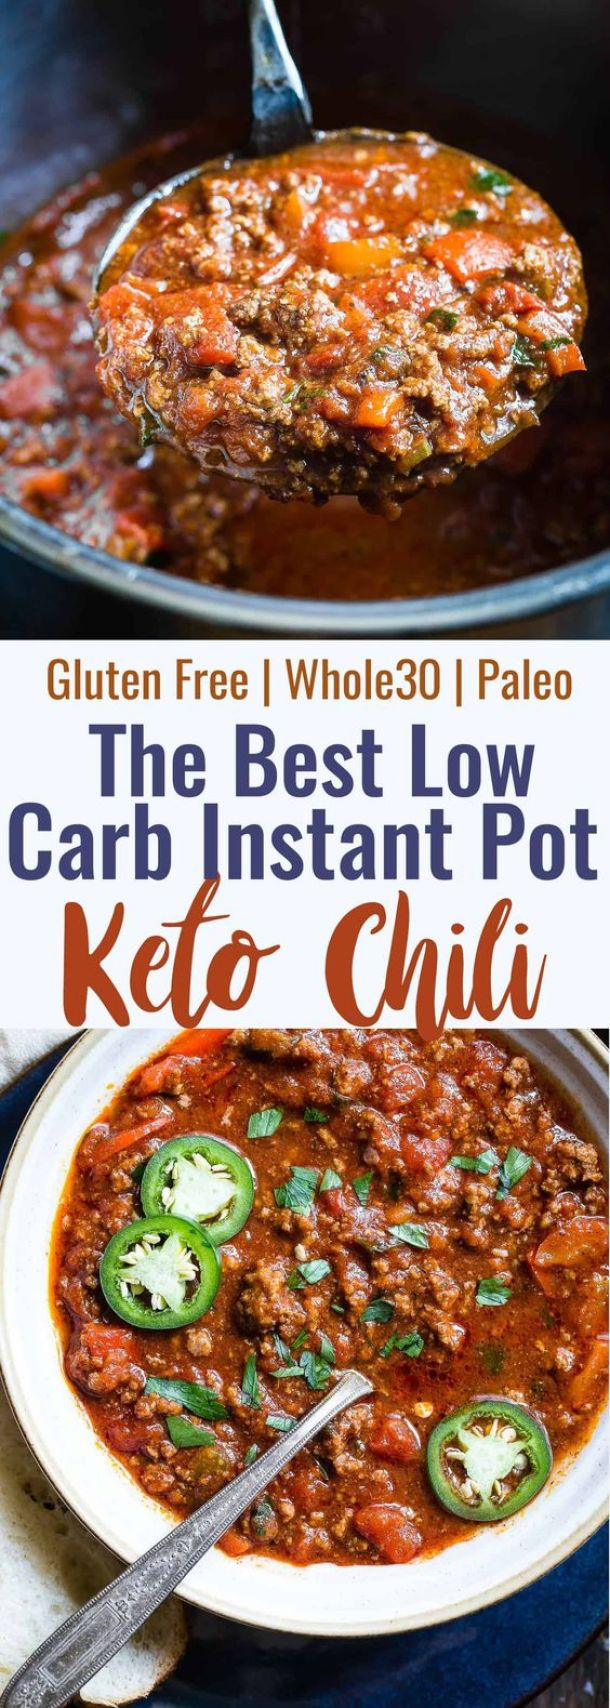 Easy Keto Instant Pot Recipes
 100 Delicious Easy Keto Instant Pot Meals This Tiny